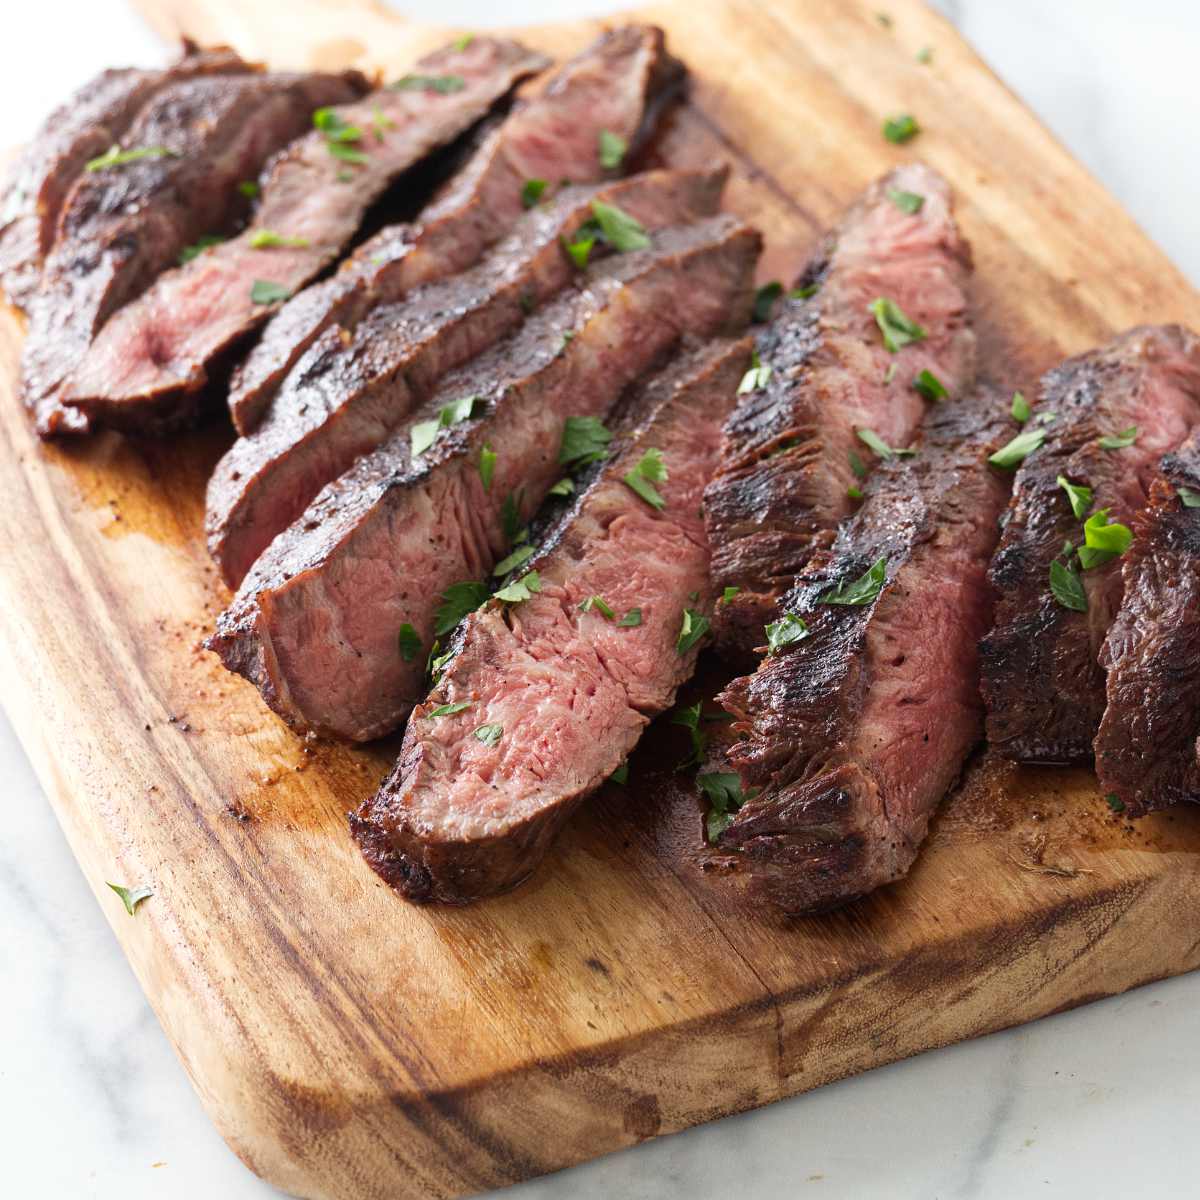 Sliced flat iron steak on a cutting board.